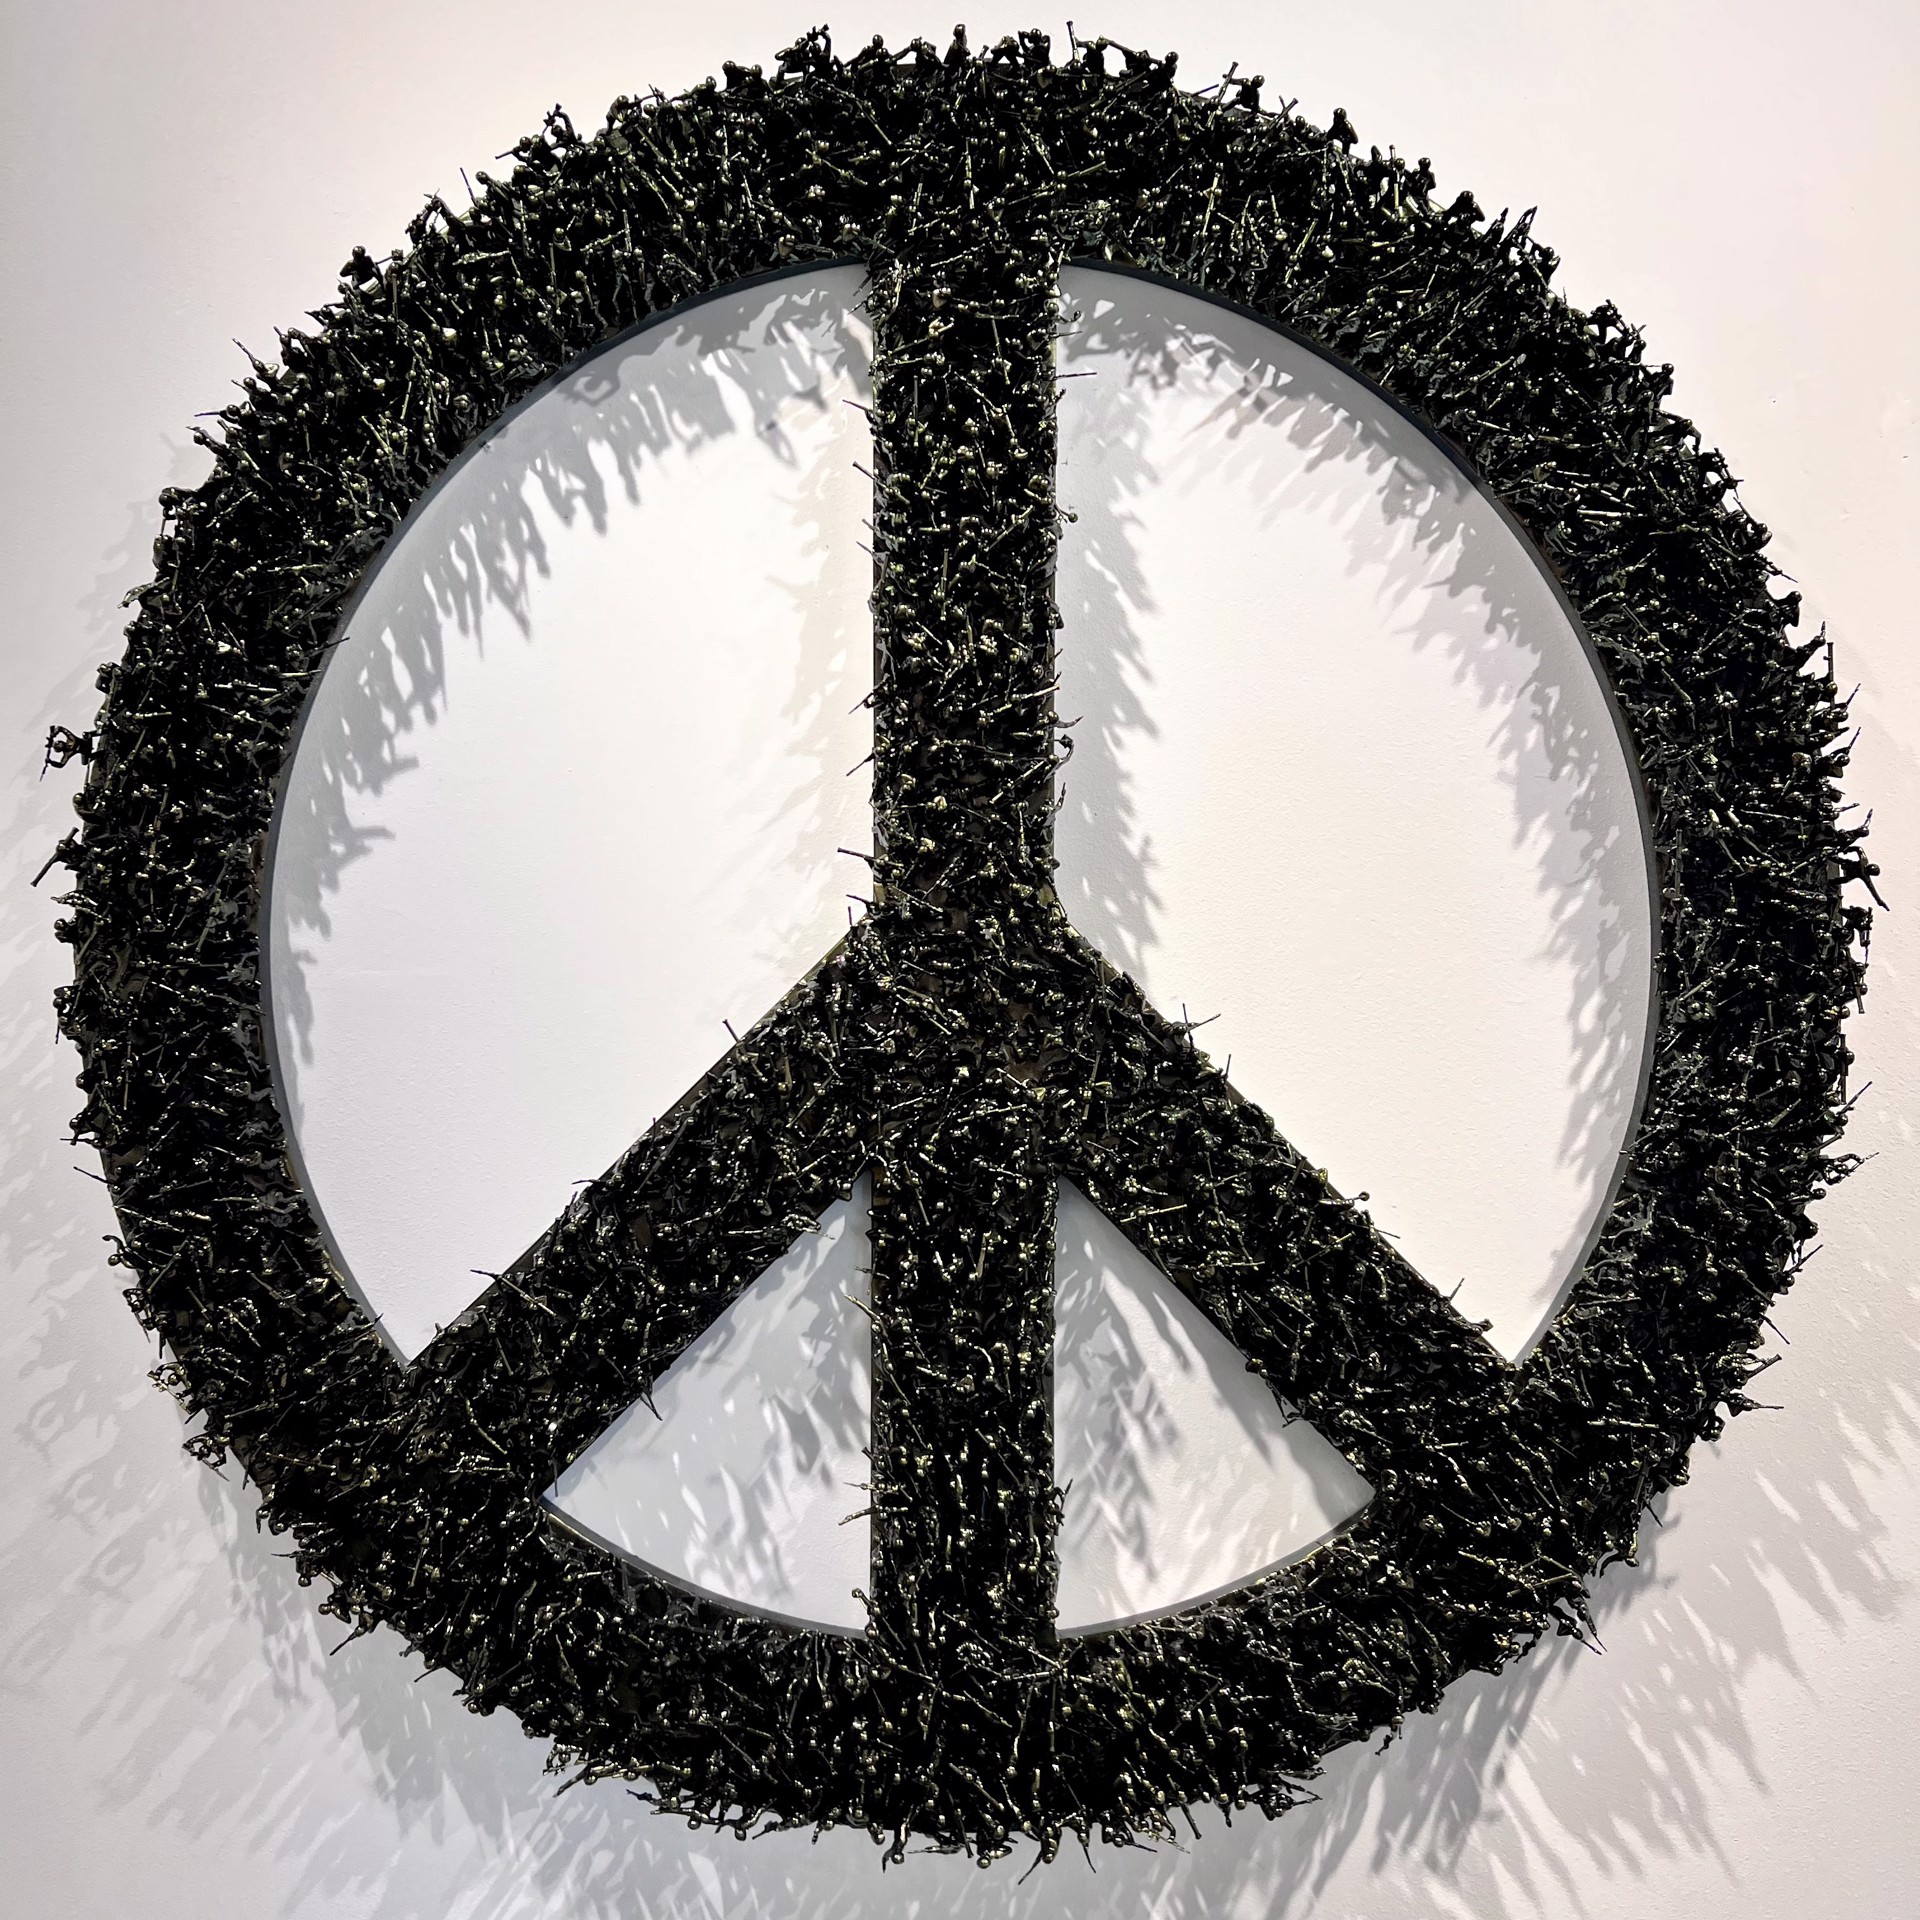 Green Peace Sign by Karen Hawkins